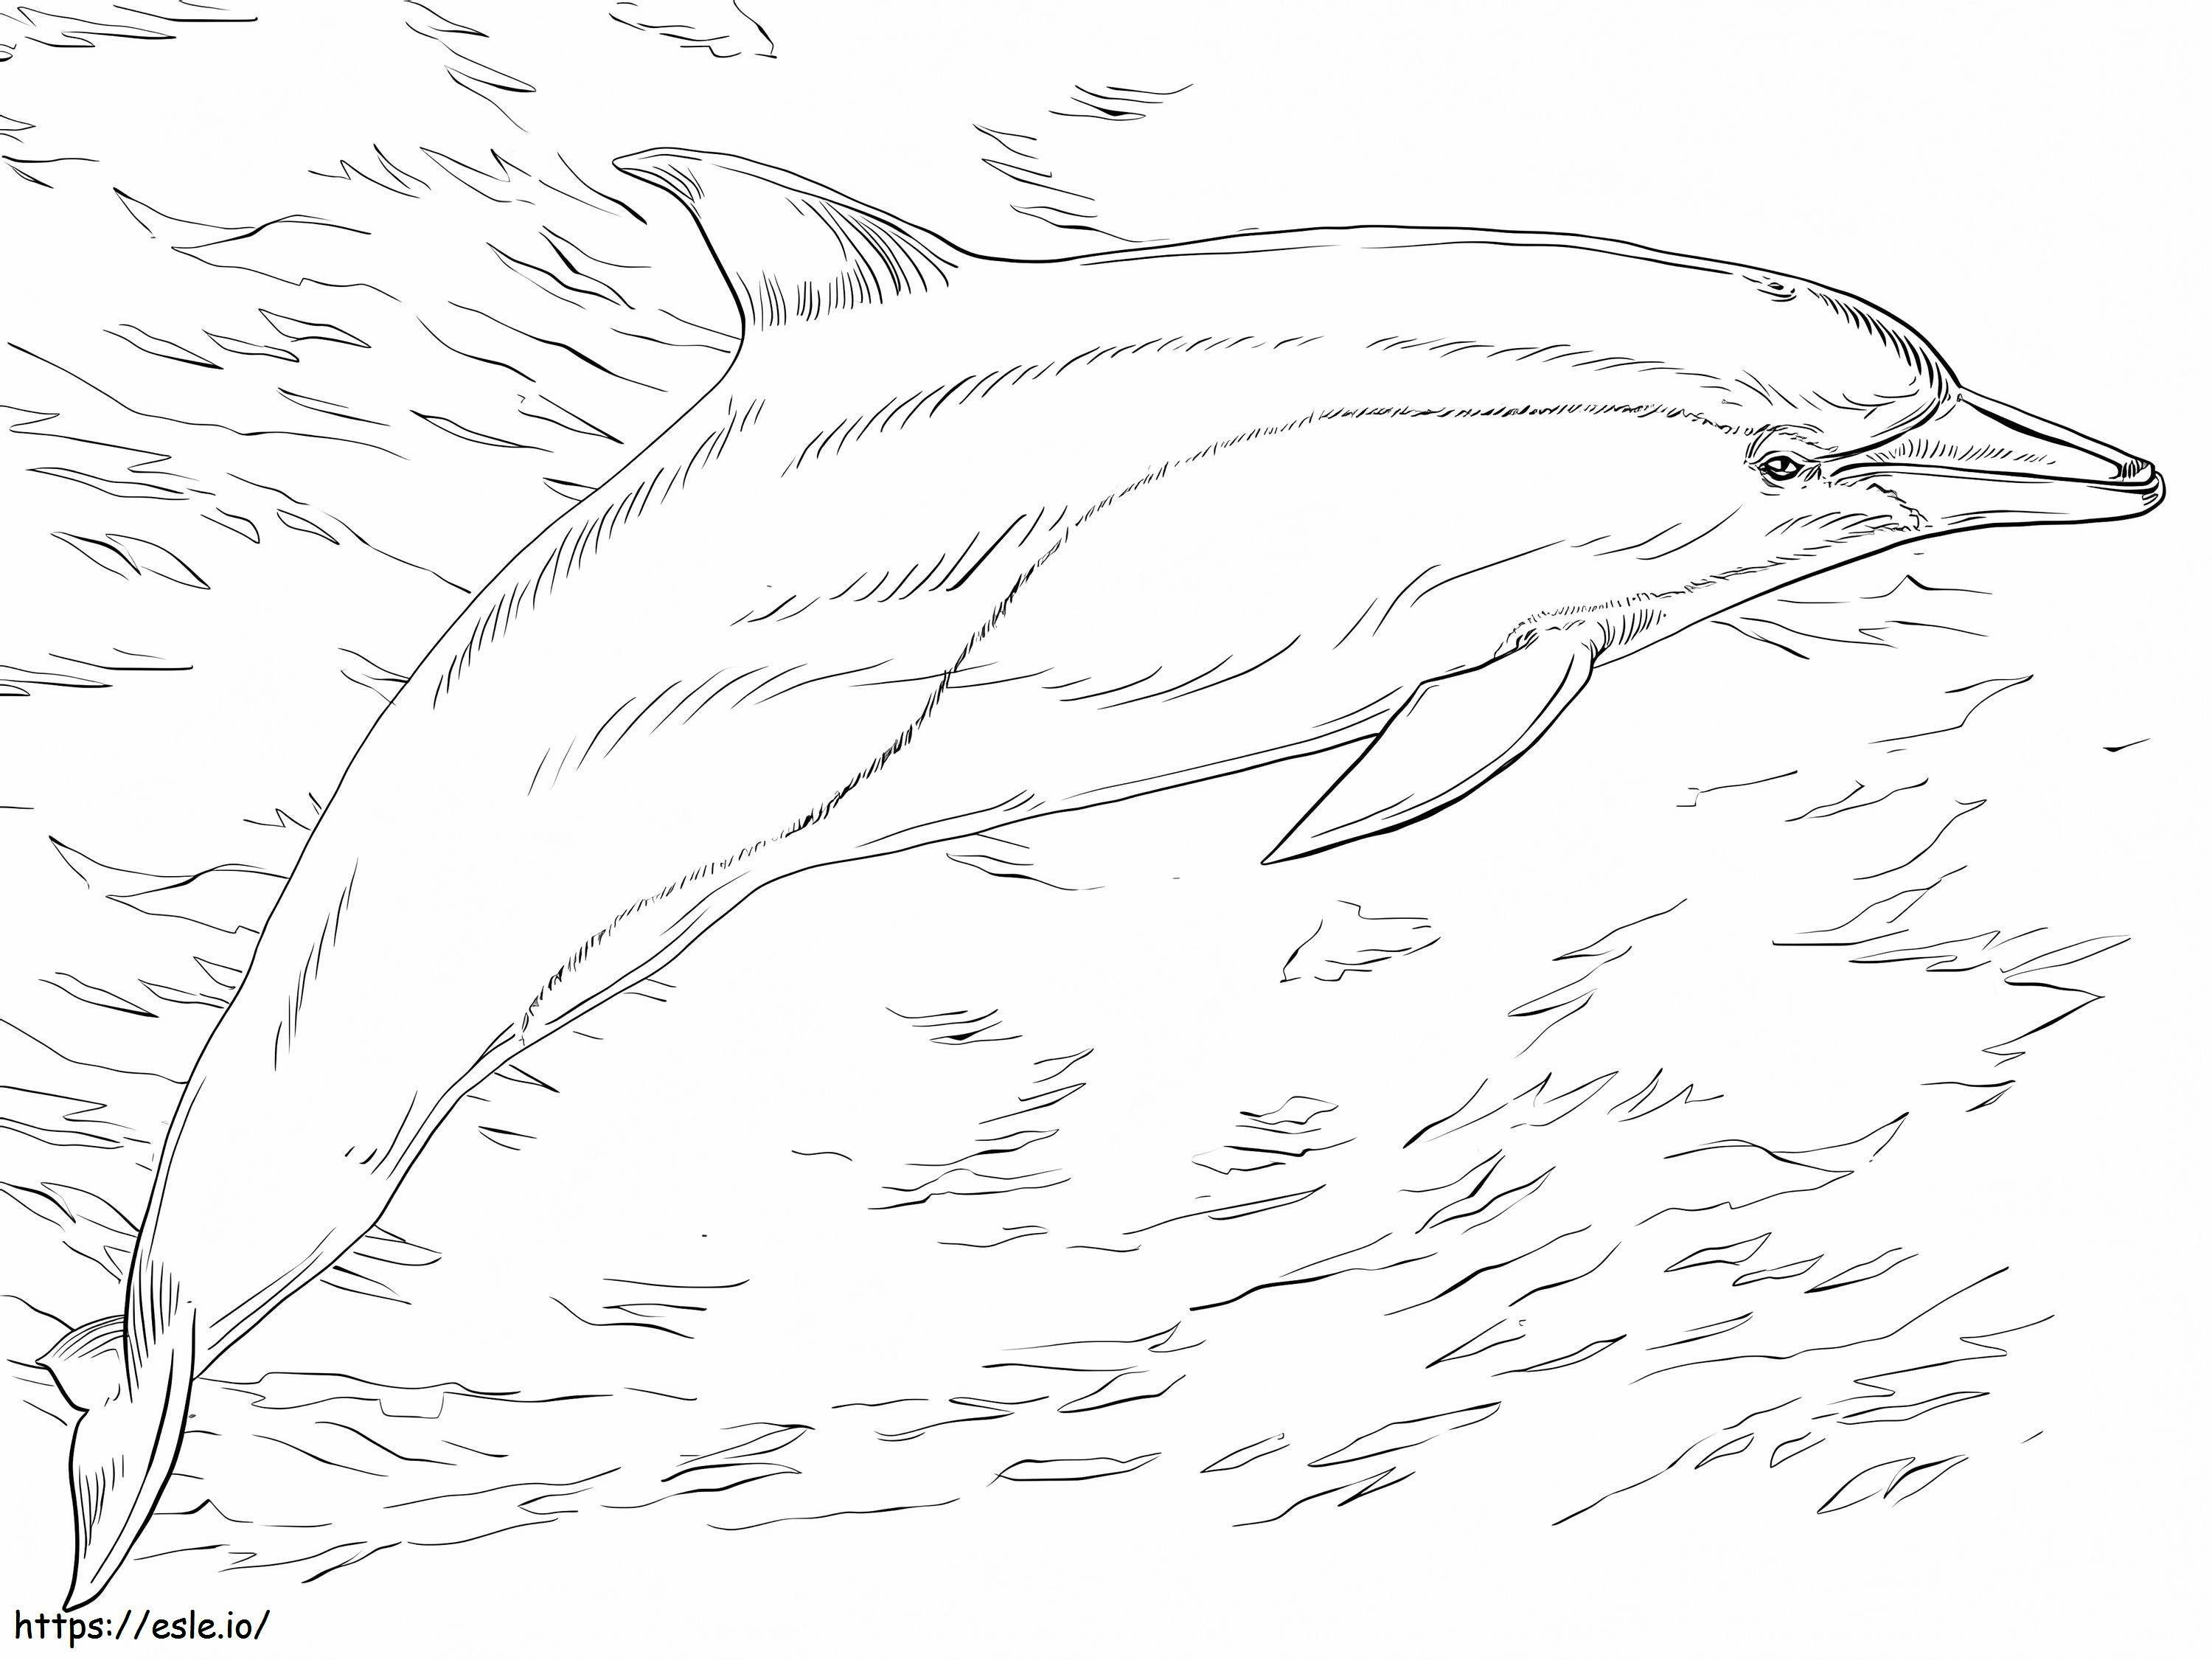 Delfinul comun de colorat